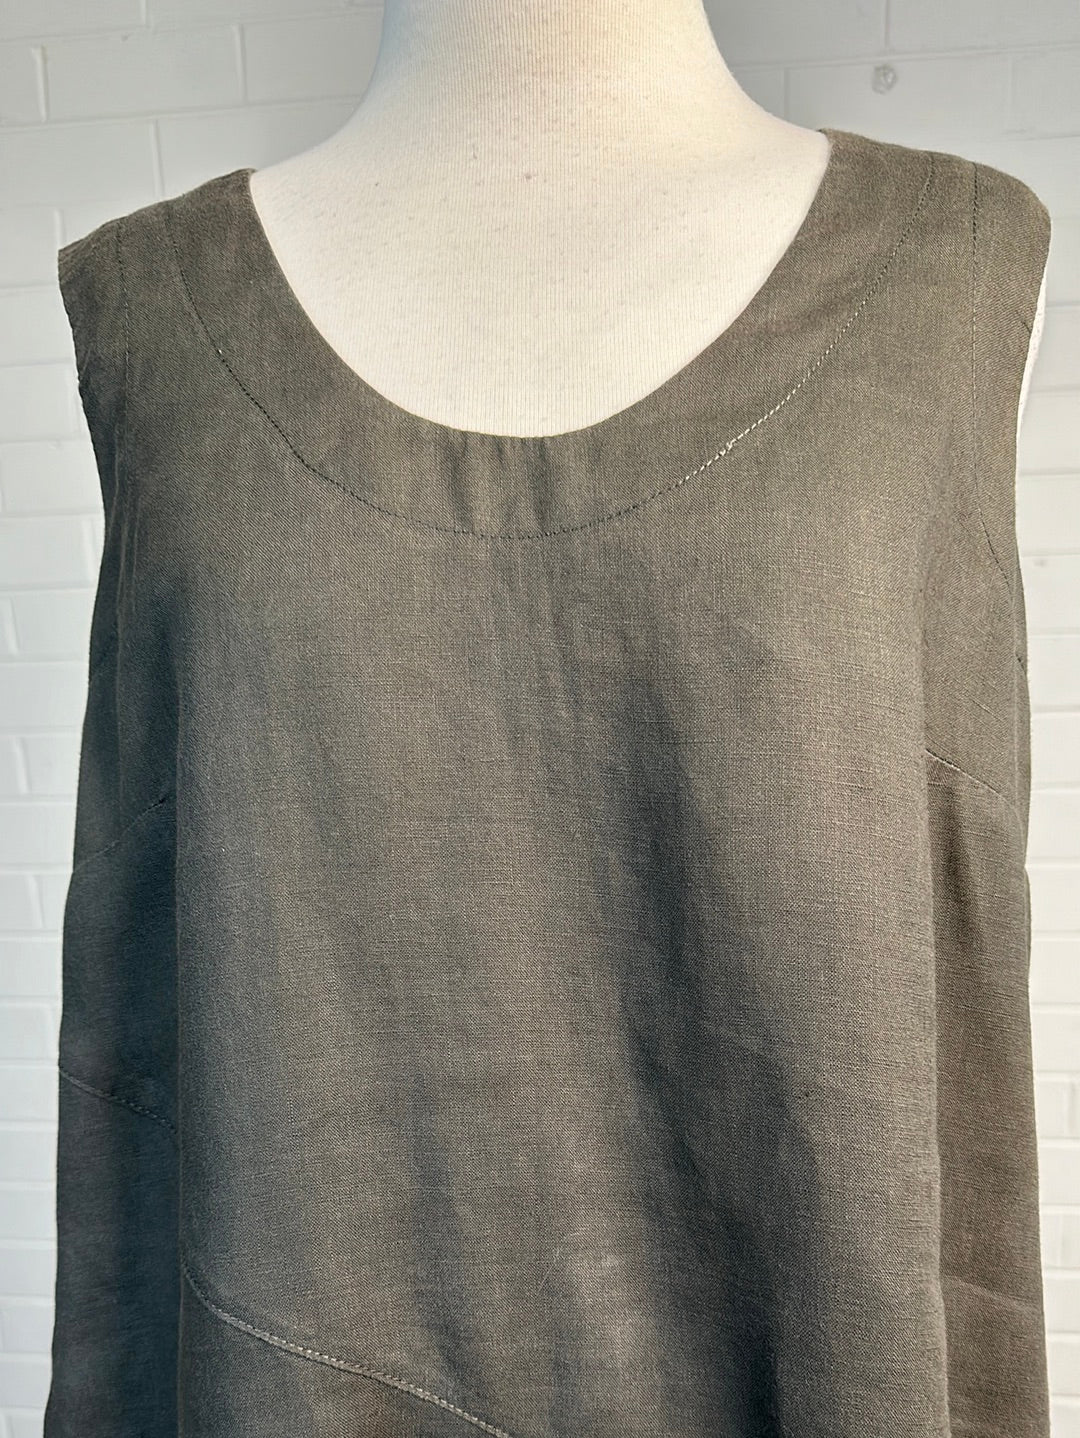 Meredith | top | size 10 | sleeveless | 100% linen